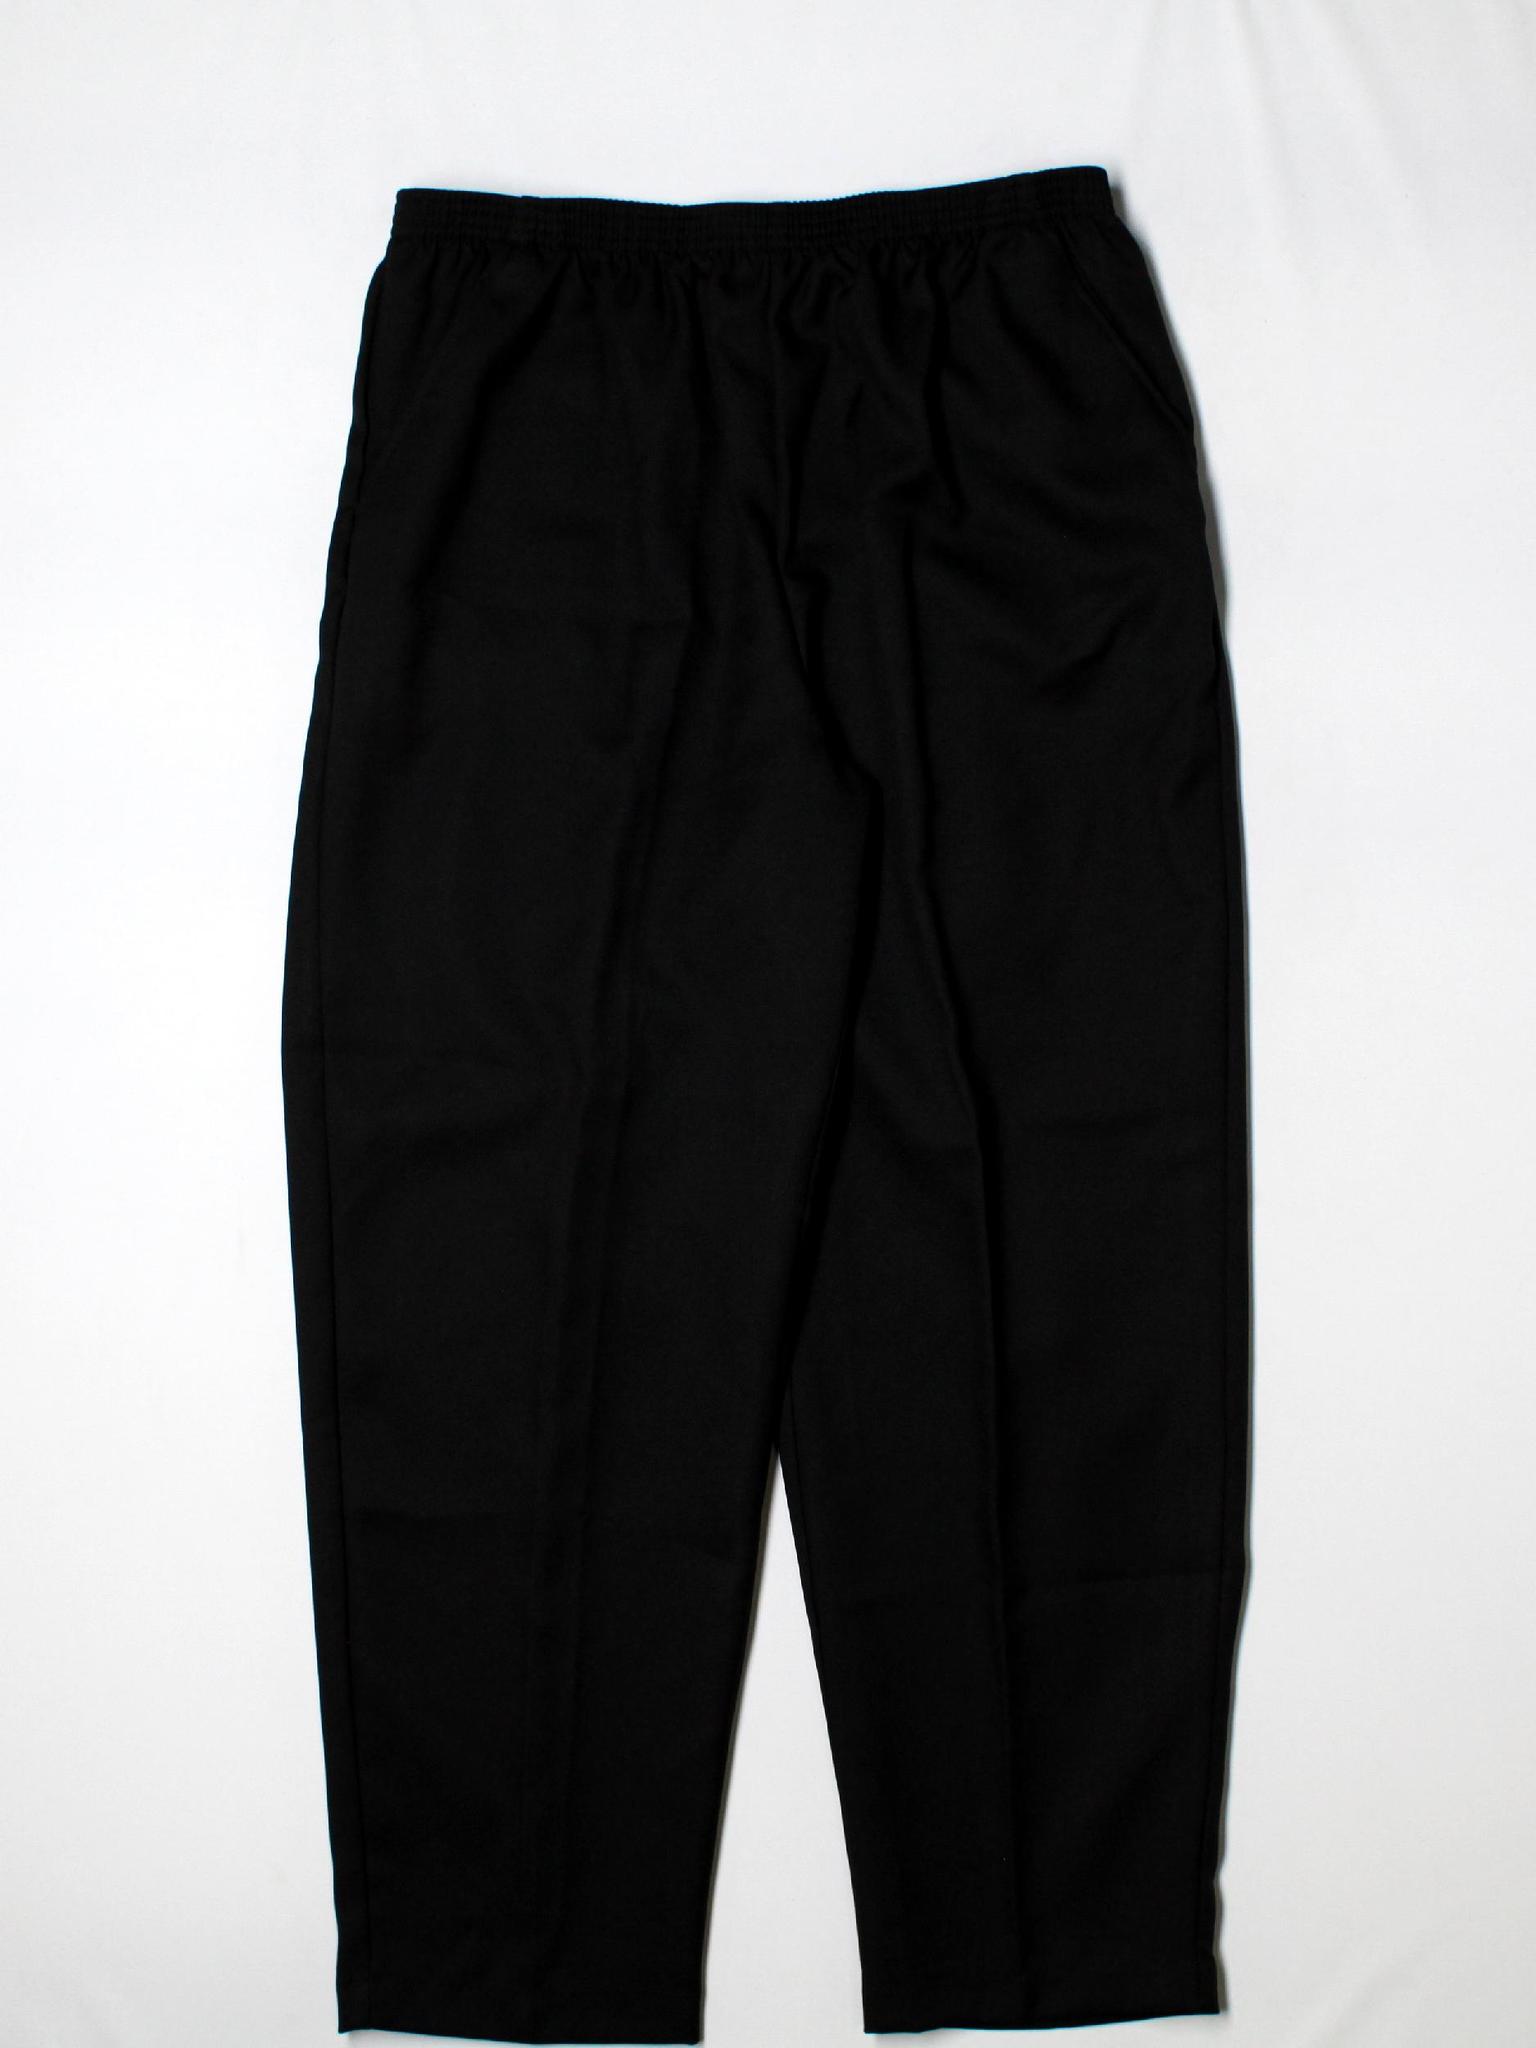 Monterey Canyon Apparel Casual Pants Size 14 (Petite) - 85% off | thredUP